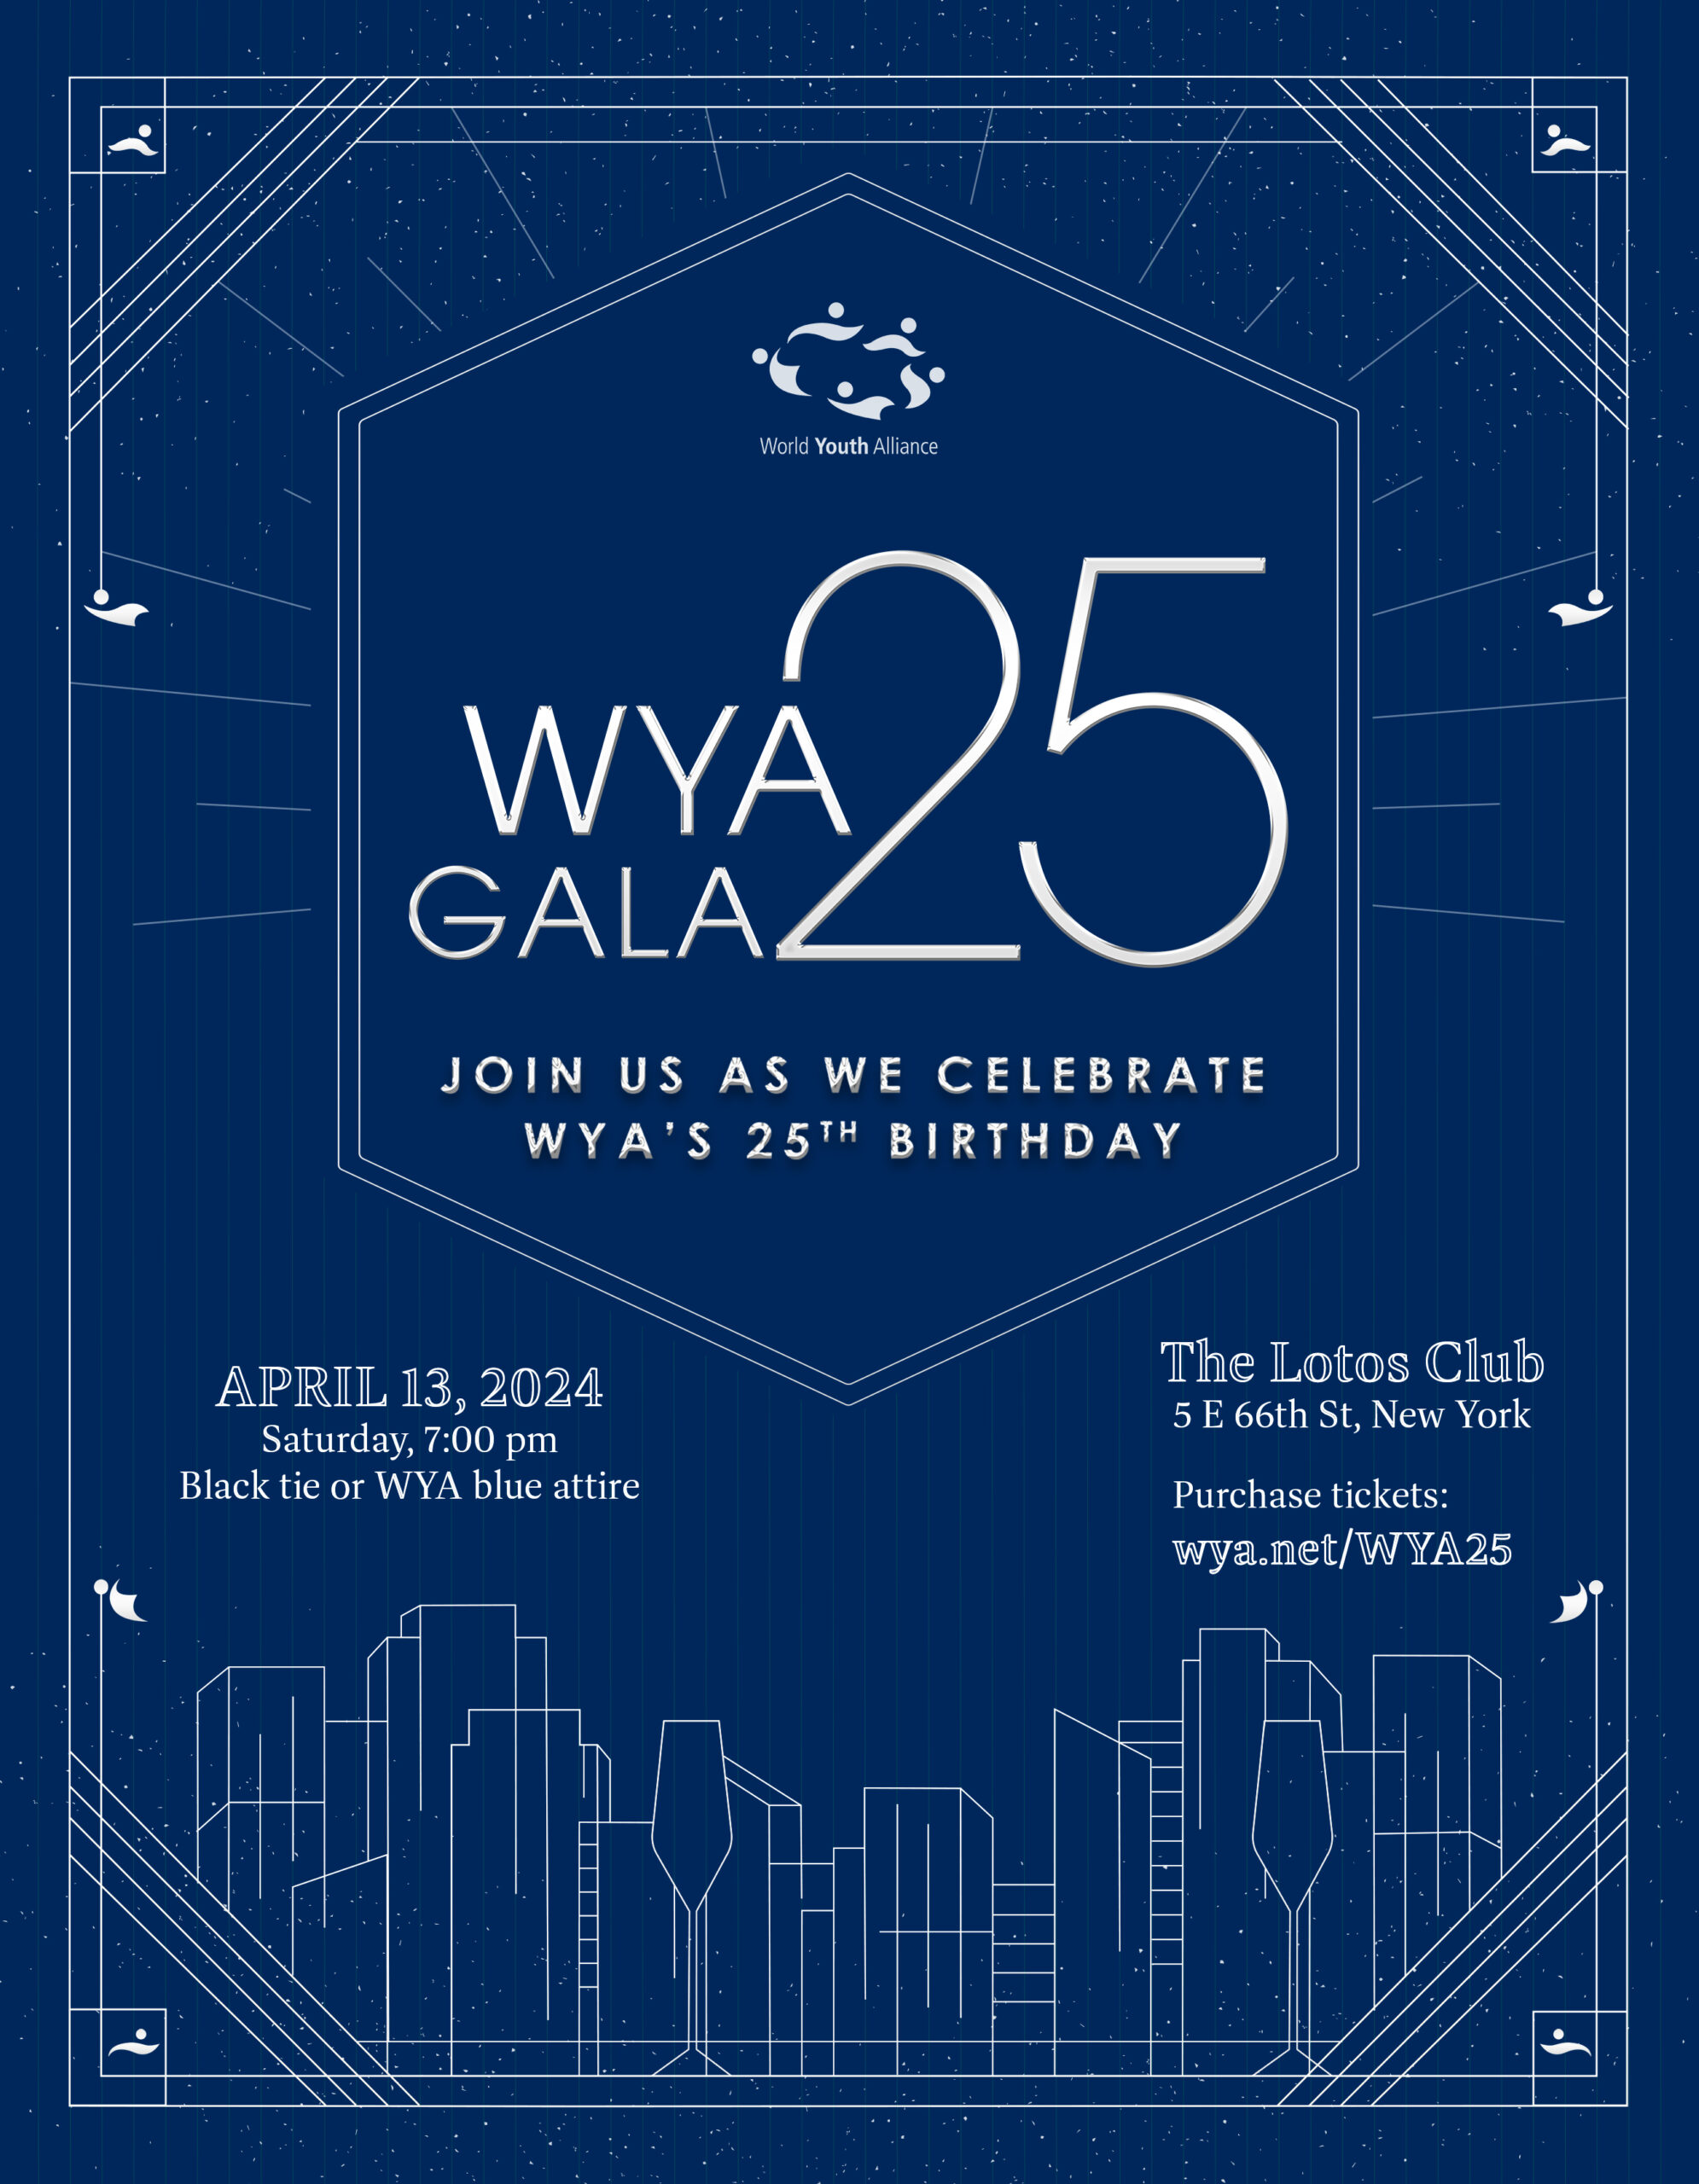 WYA's 25th Birthday Gala